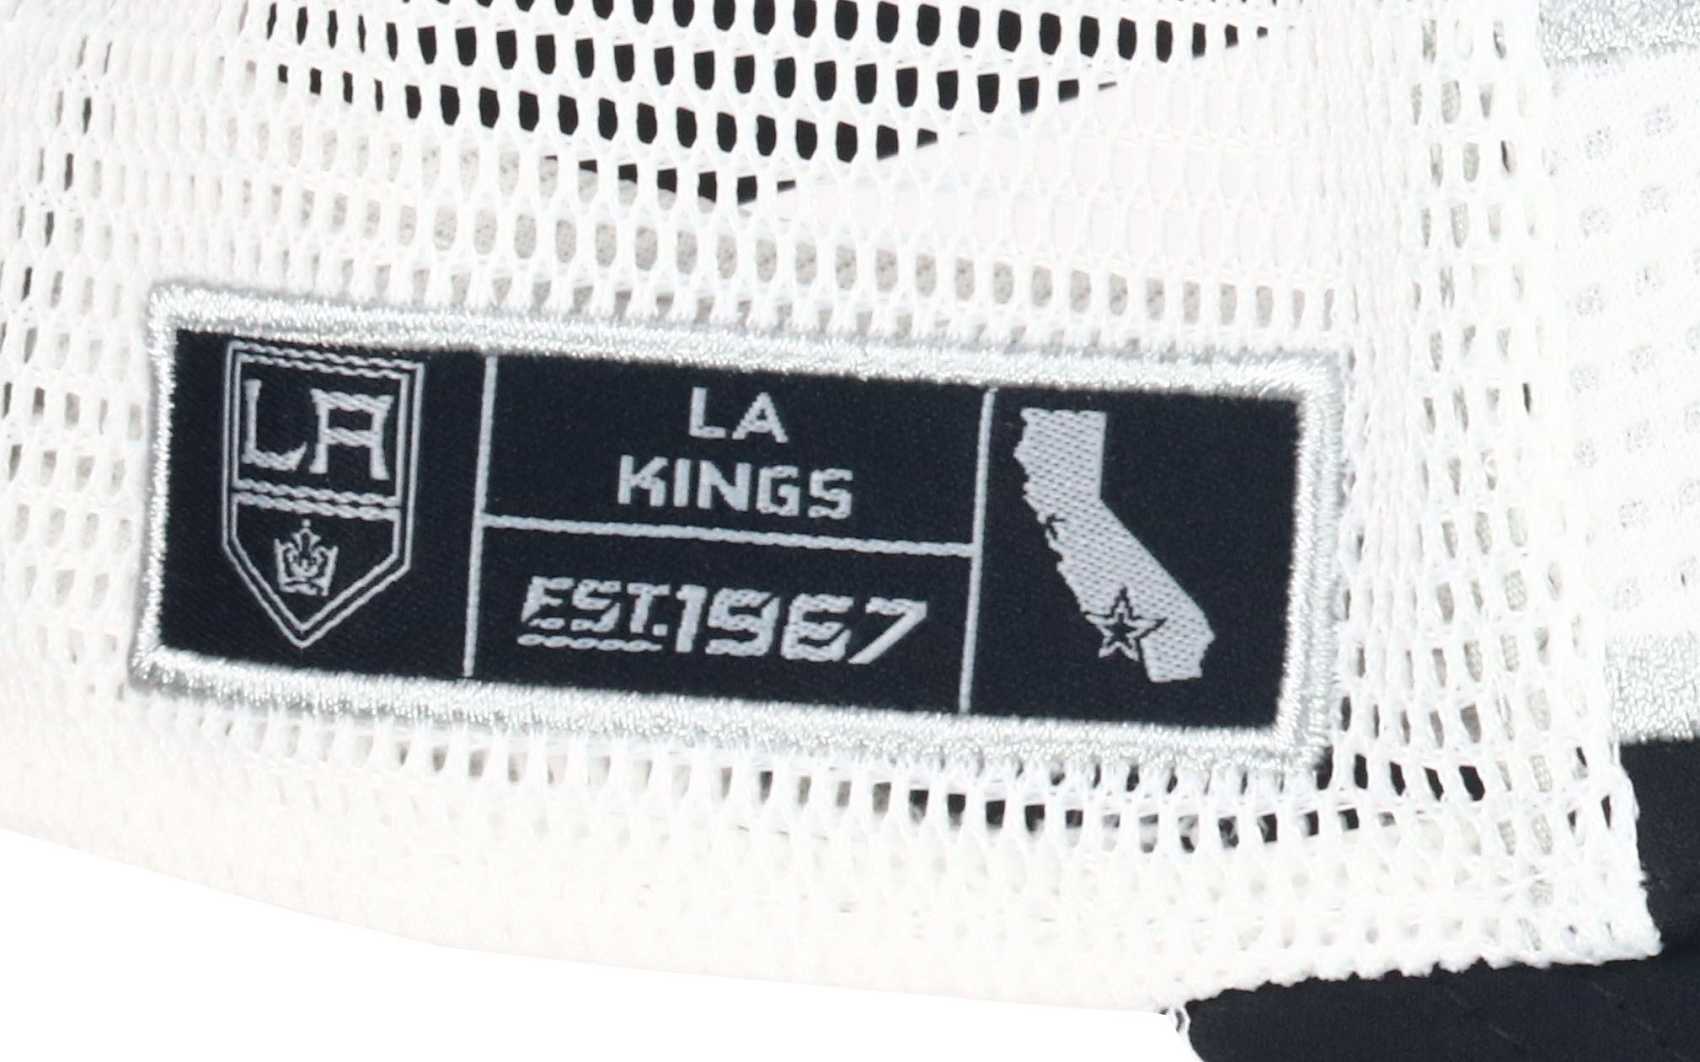 Los Angeles Kings NHL Authentic Pro Draft Structured Trucker Cap Fanatics